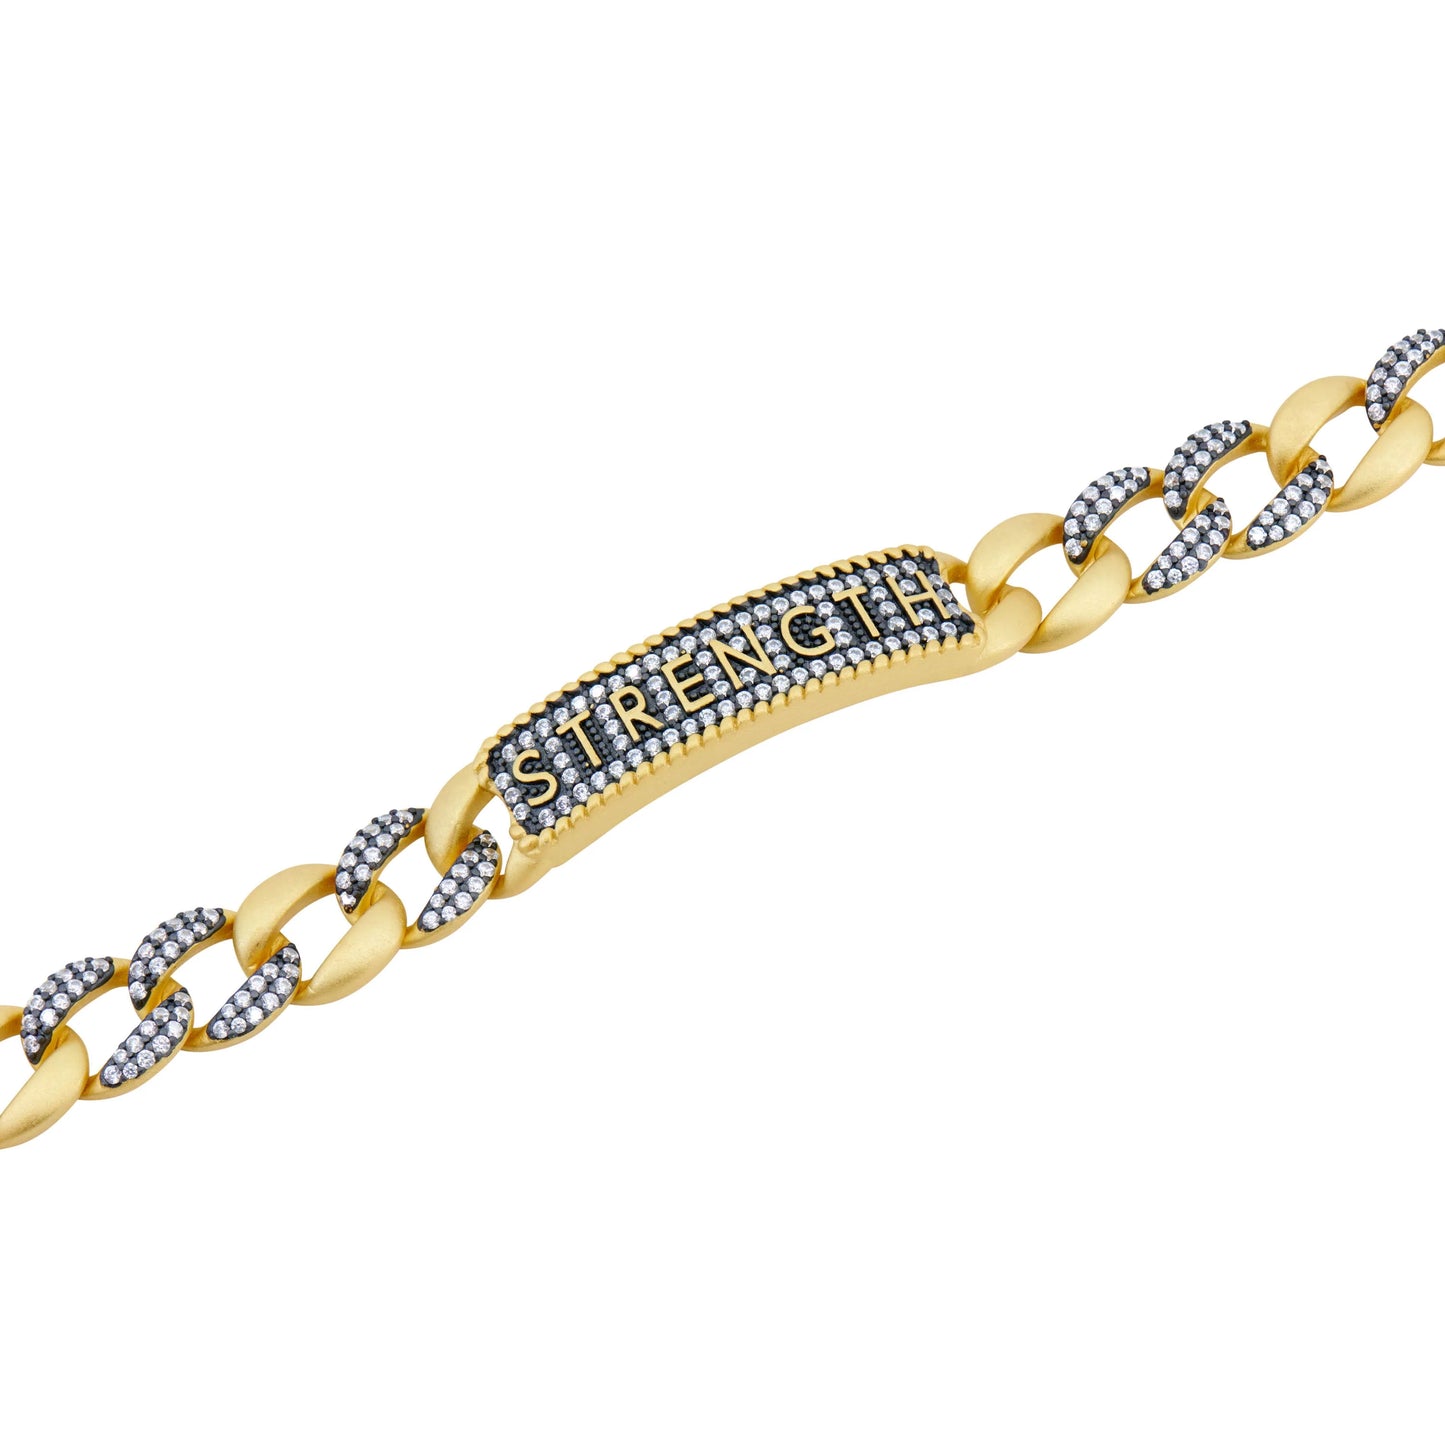 The STRENGTH Chain Link Bracelet